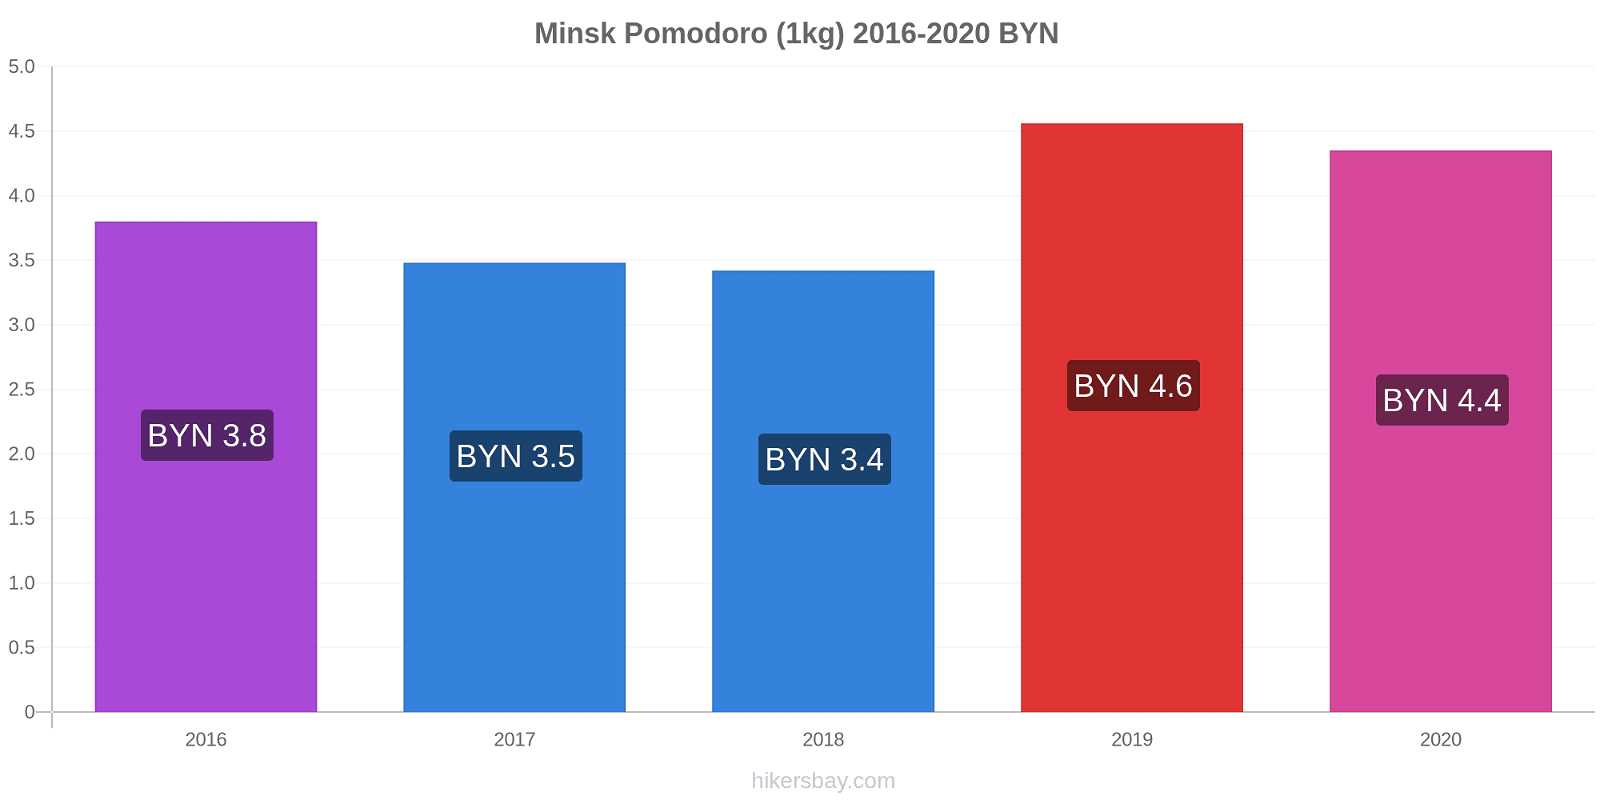 Minsk variazioni di prezzo Pomodoro (1kg) hikersbay.com